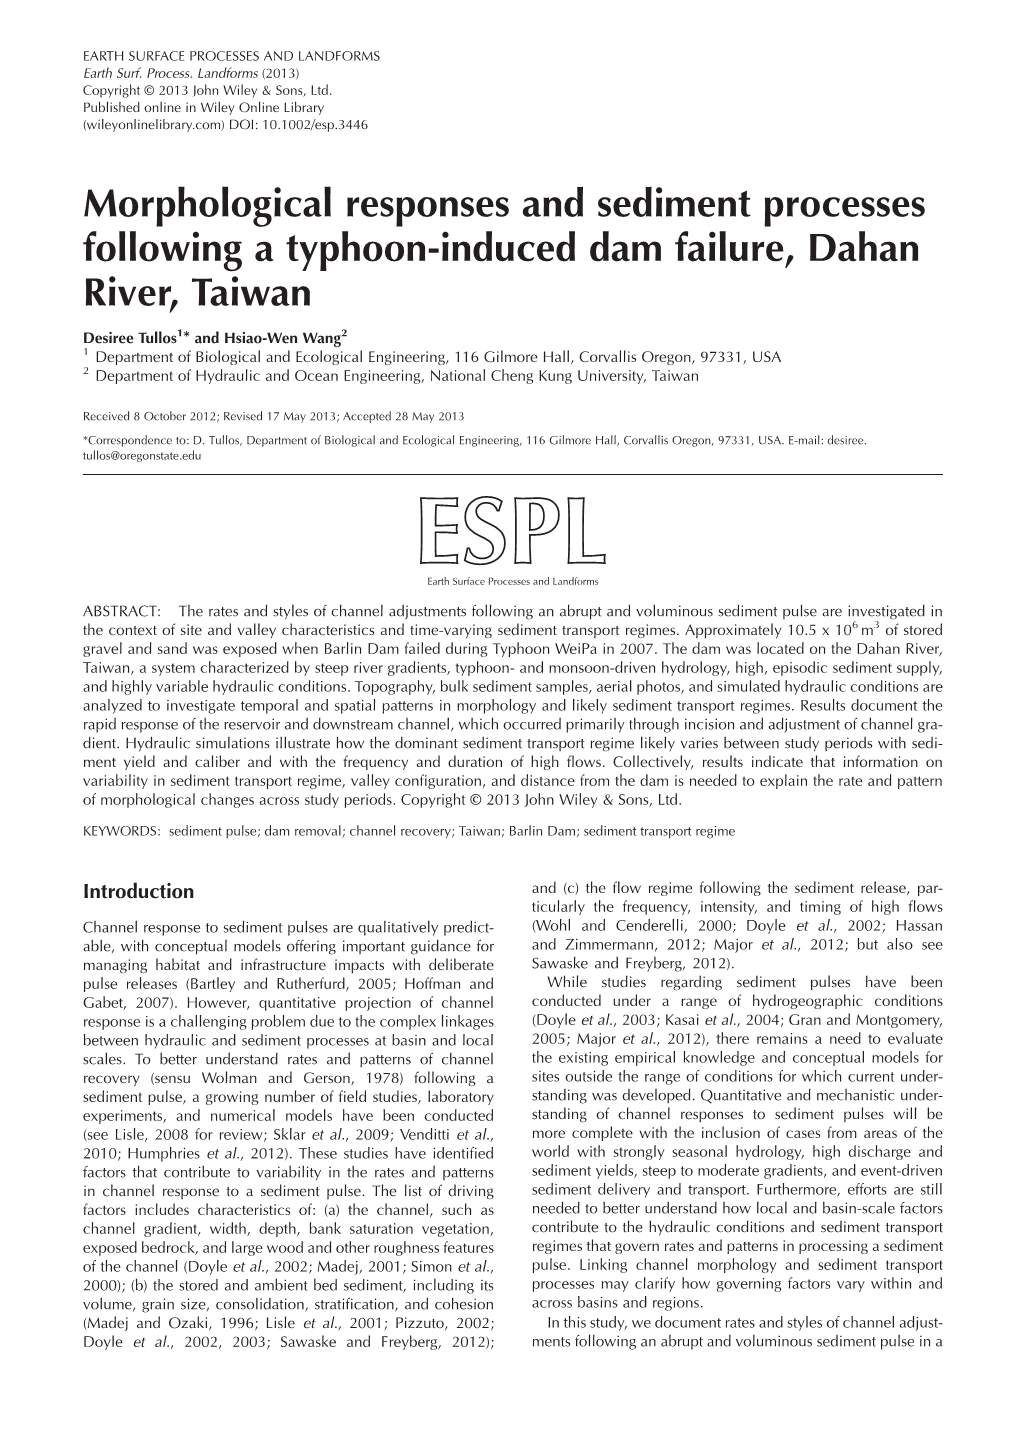 Morphological Responses and Sediment Processes Following a Typhooninduced Dam Failure, Dahan River, Taiwan